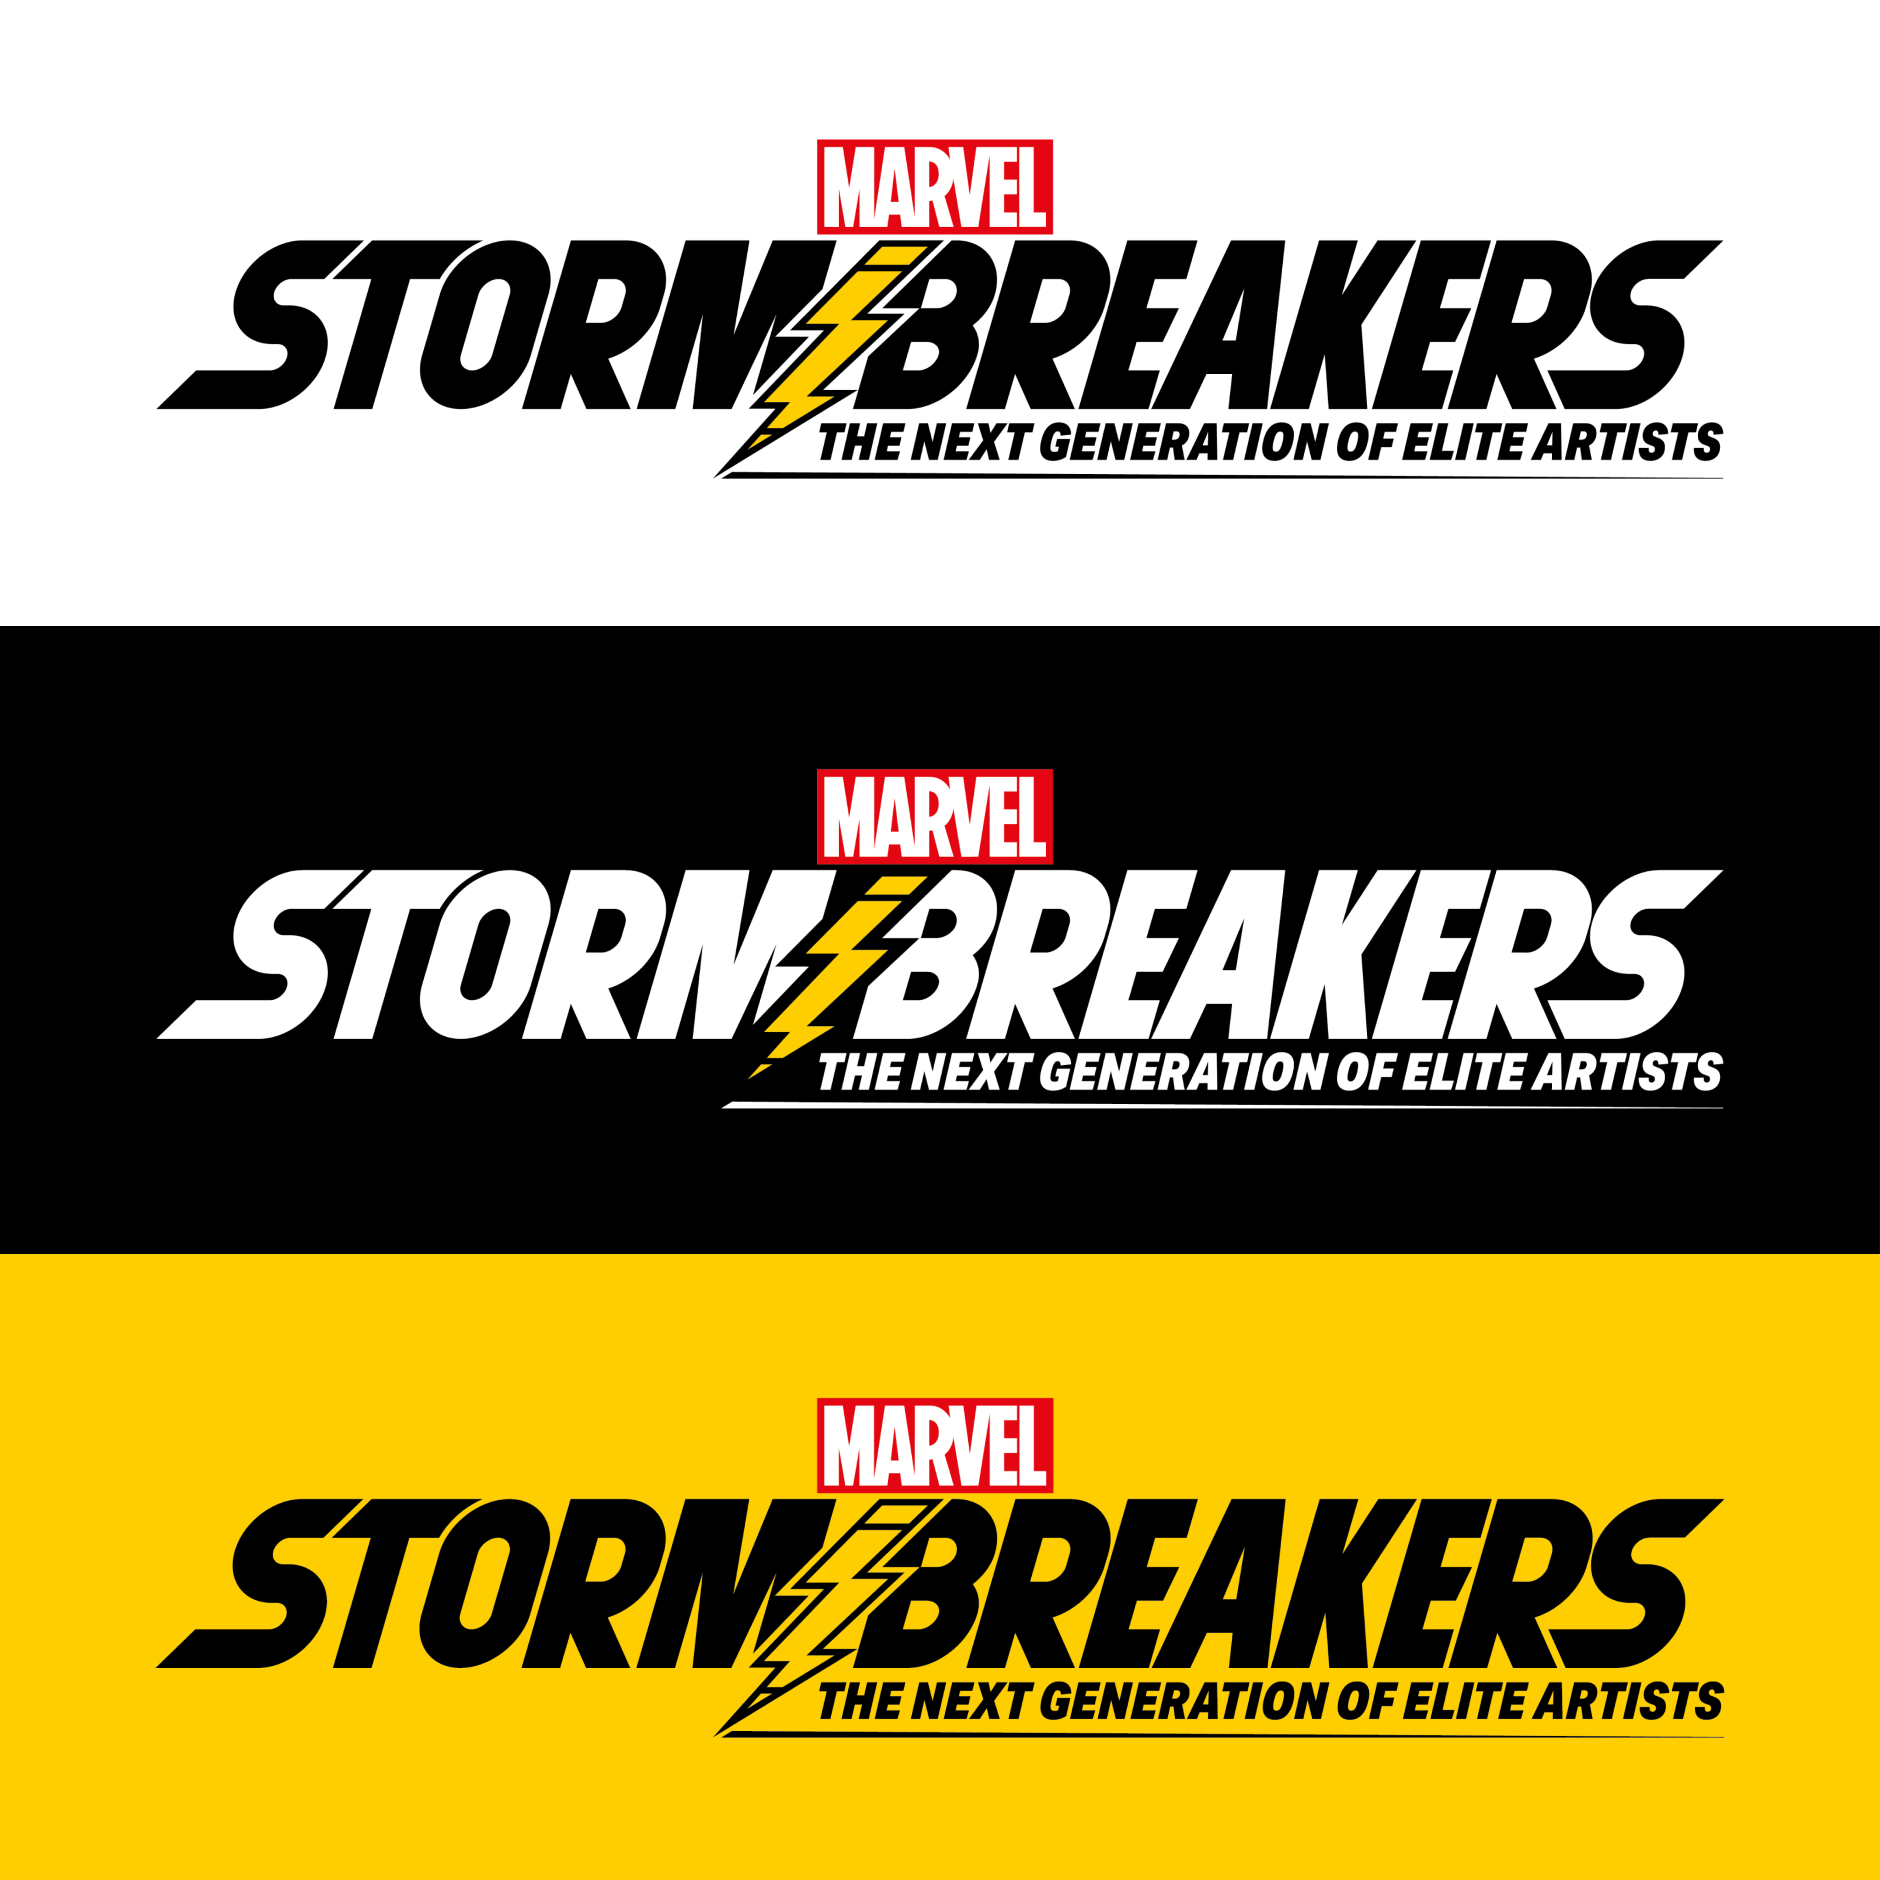 Stormbreakers logos